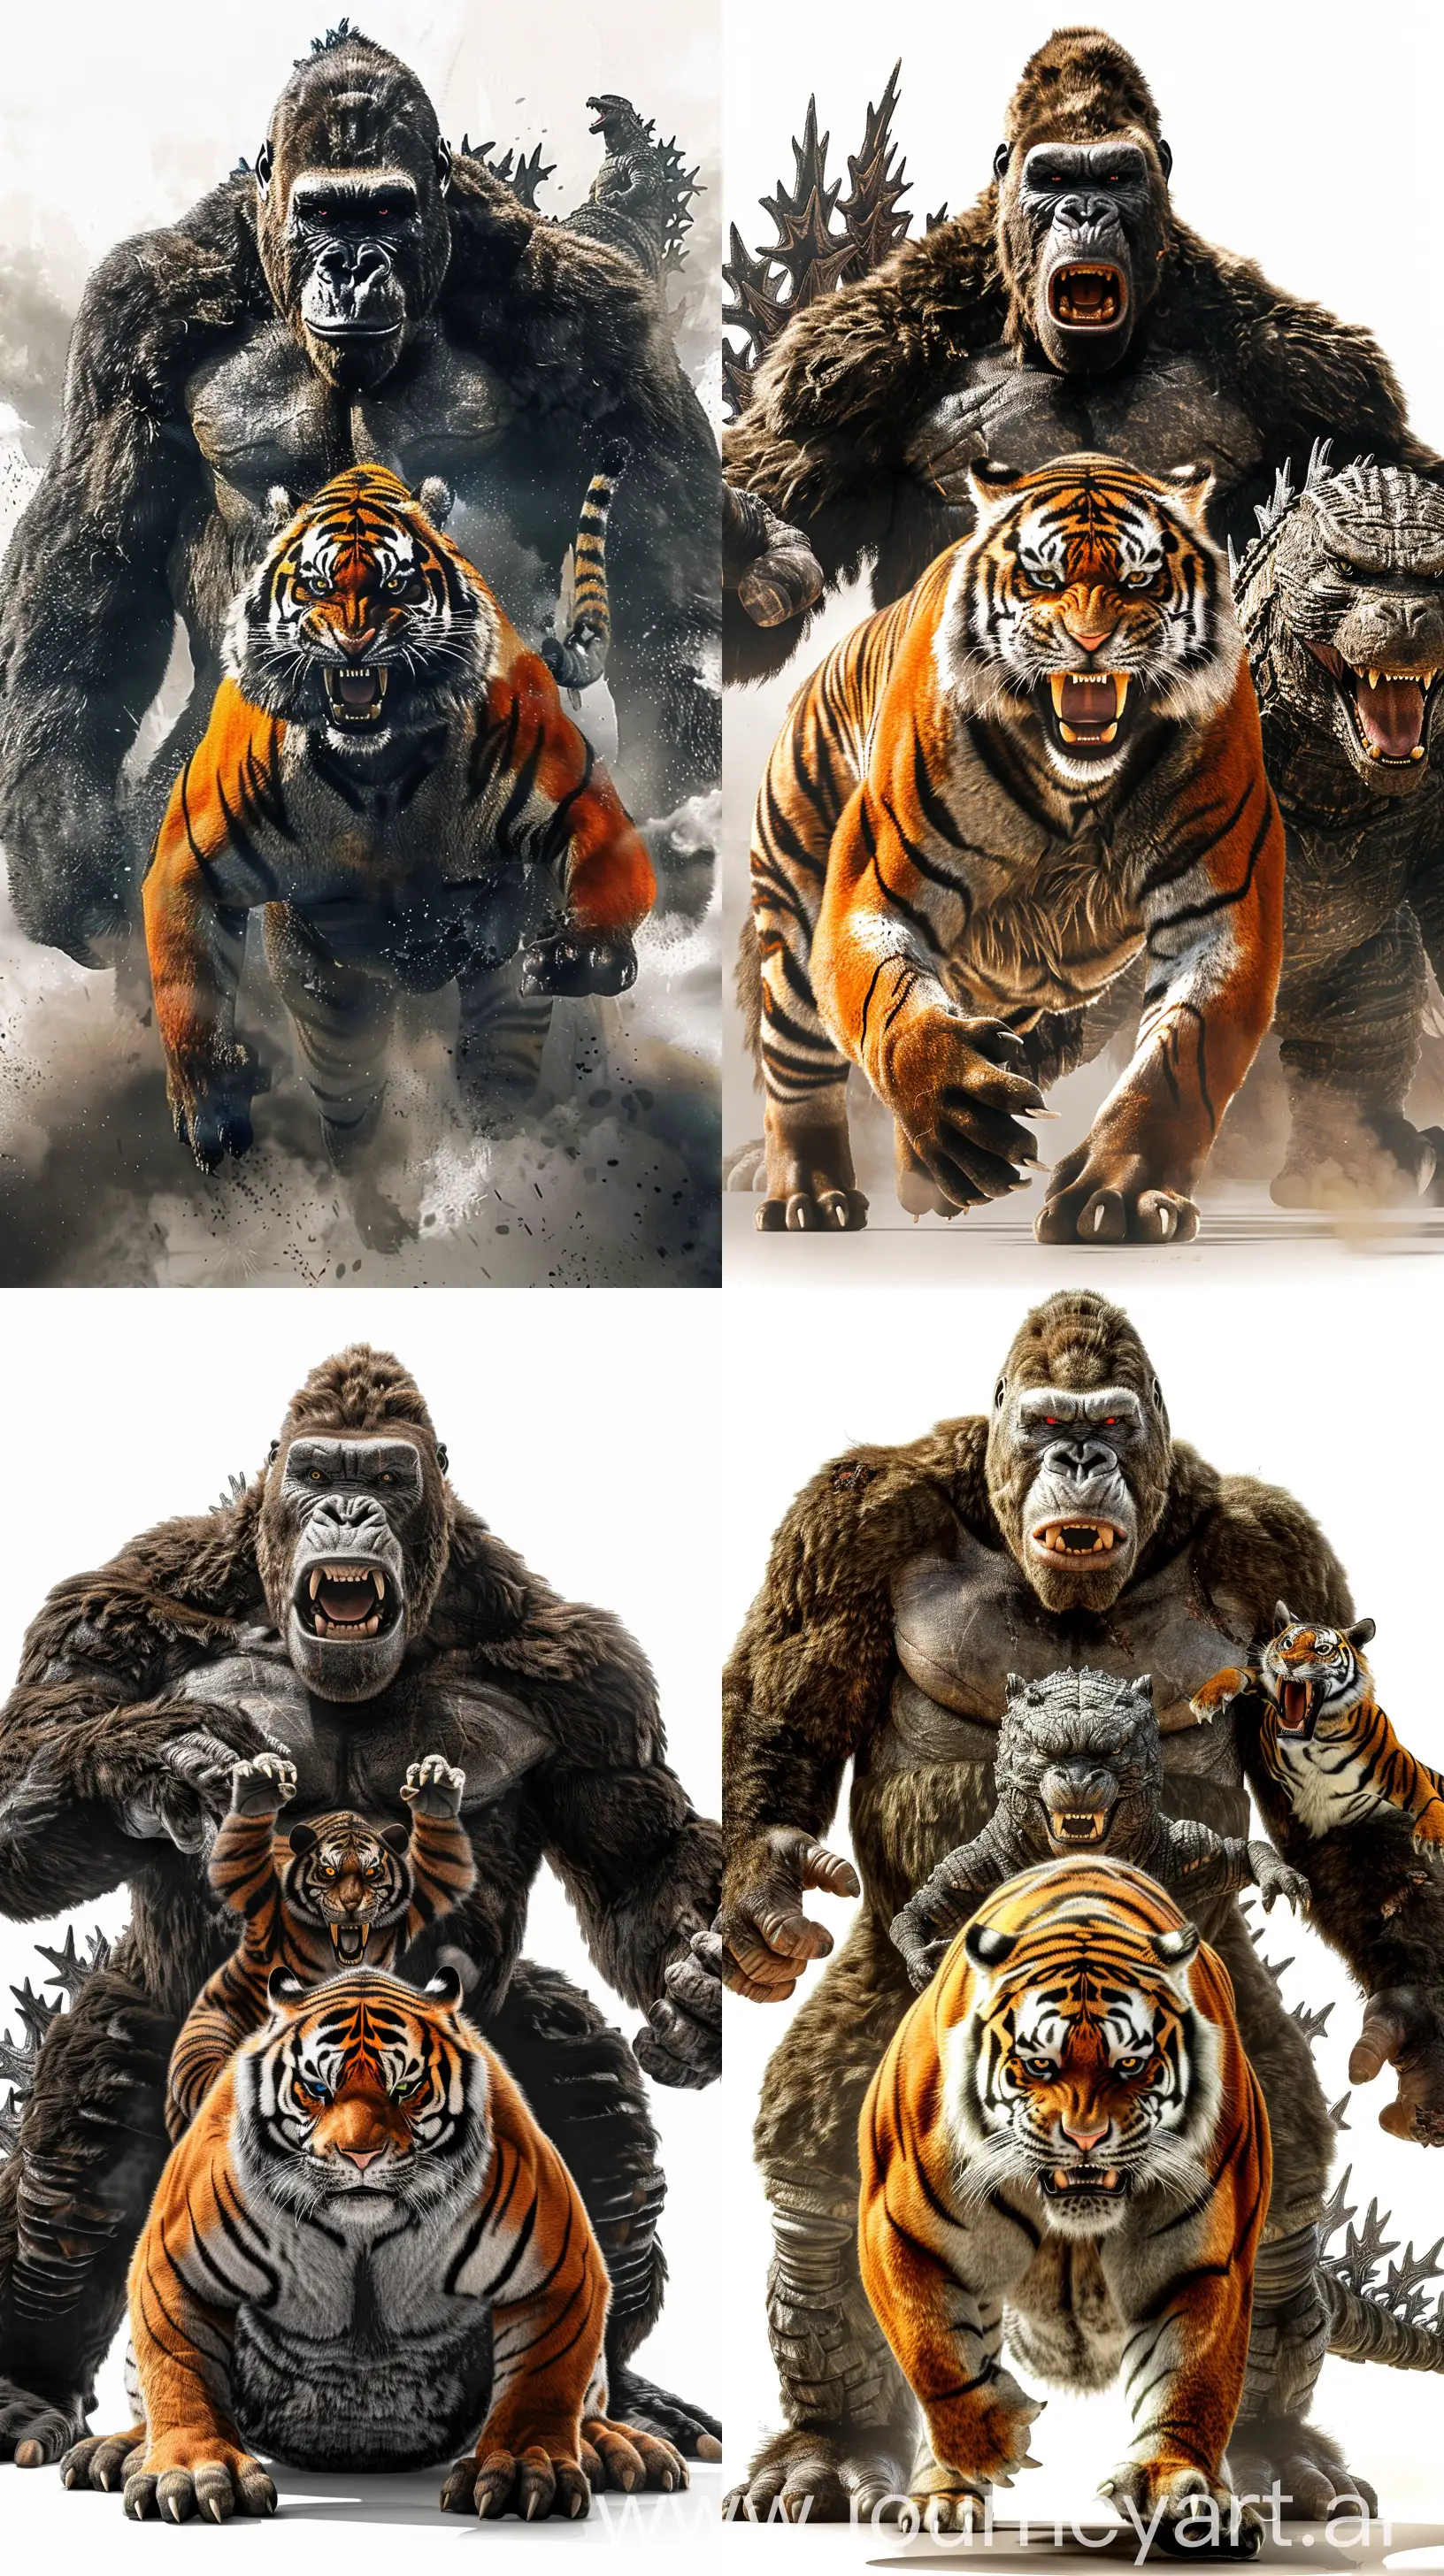 Epic-Battle-King-Kong-Tiger-and-Godzilla-Confrontation